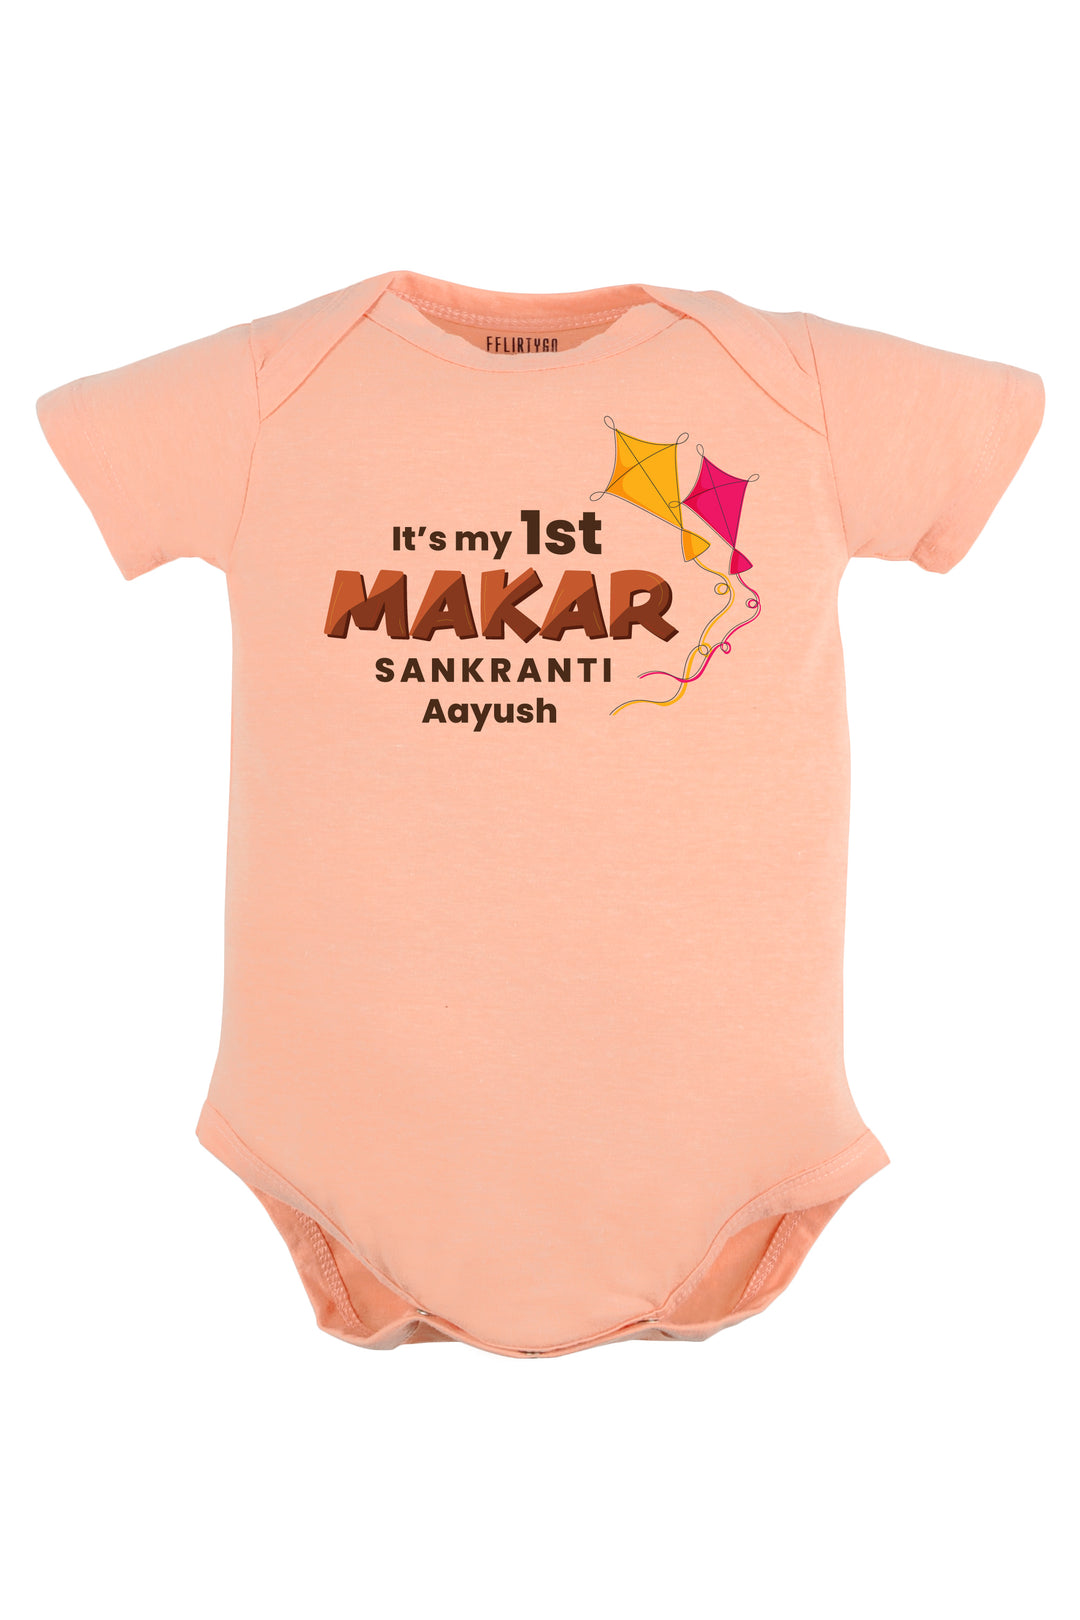 It's My 1st Makar Sankranti Baby Romper | Onesies w/ Custom Name